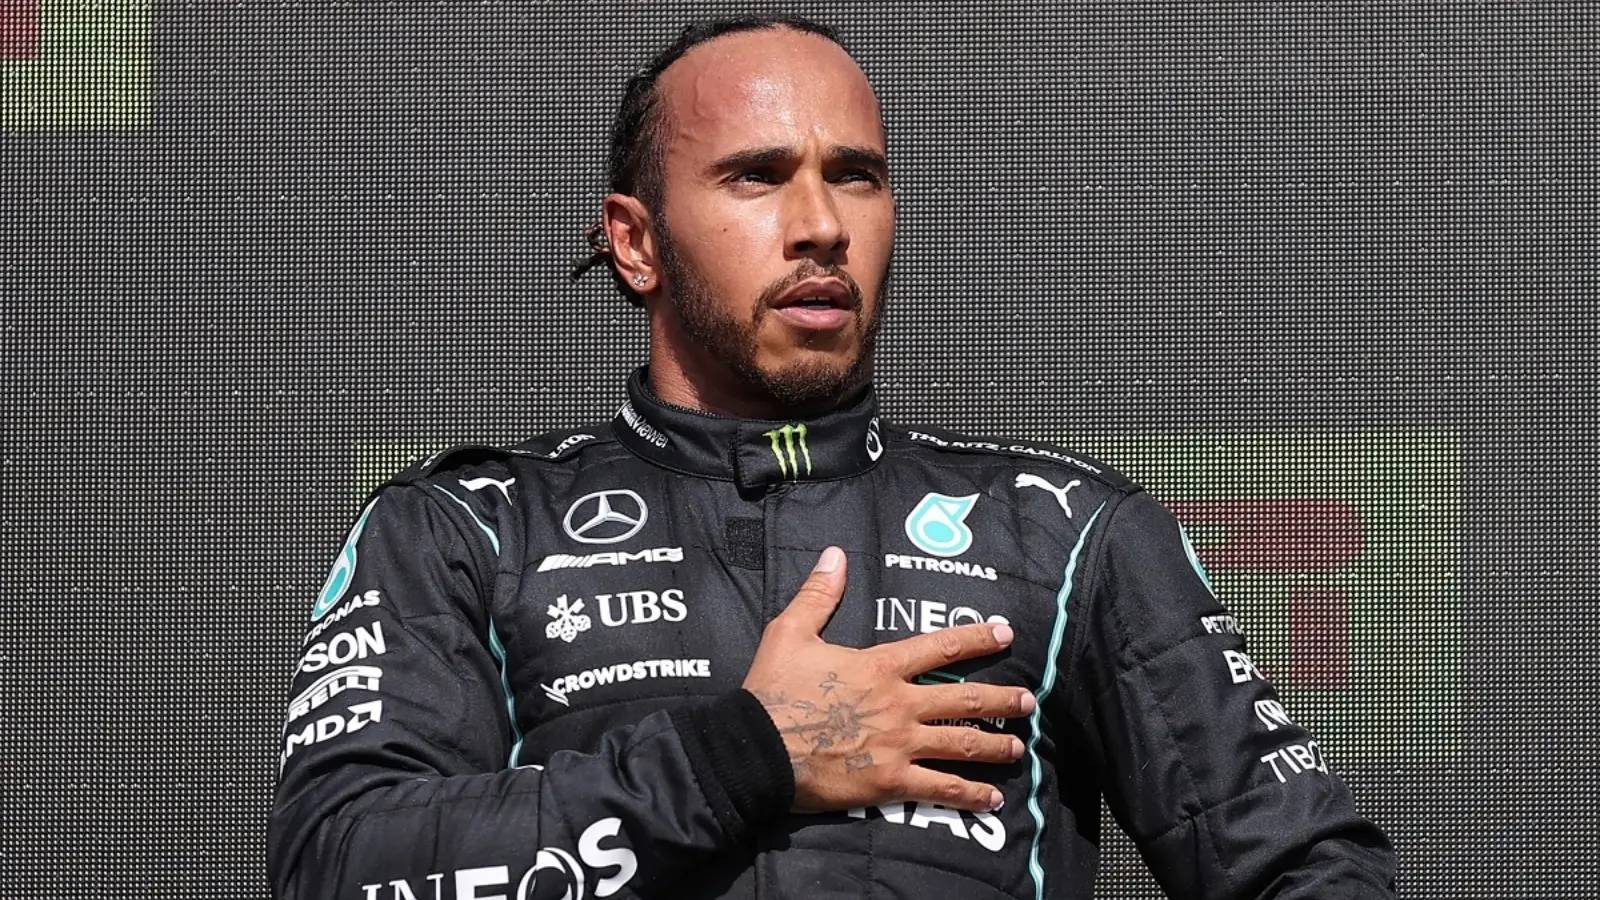 Formel 1 Lewis Hamilton Arg final Mercedes bilmeddelande